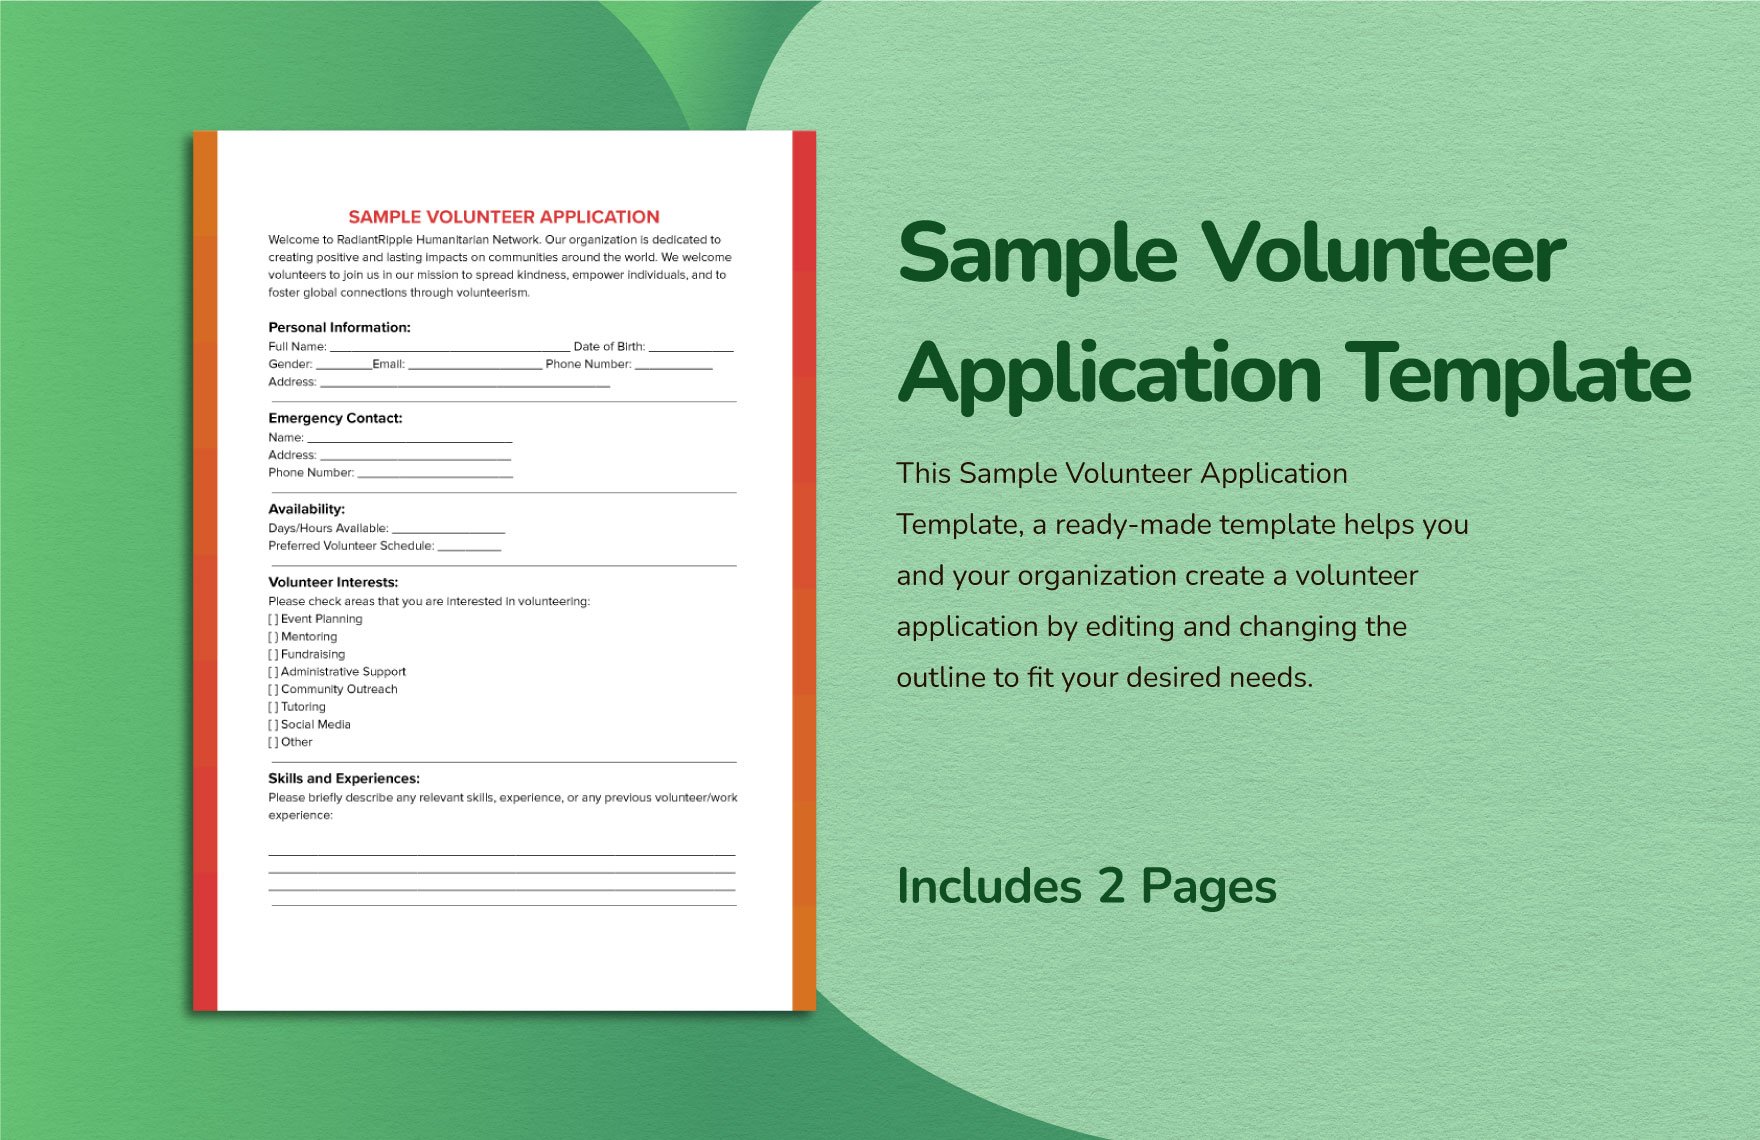 Sample Volunteer Application Template